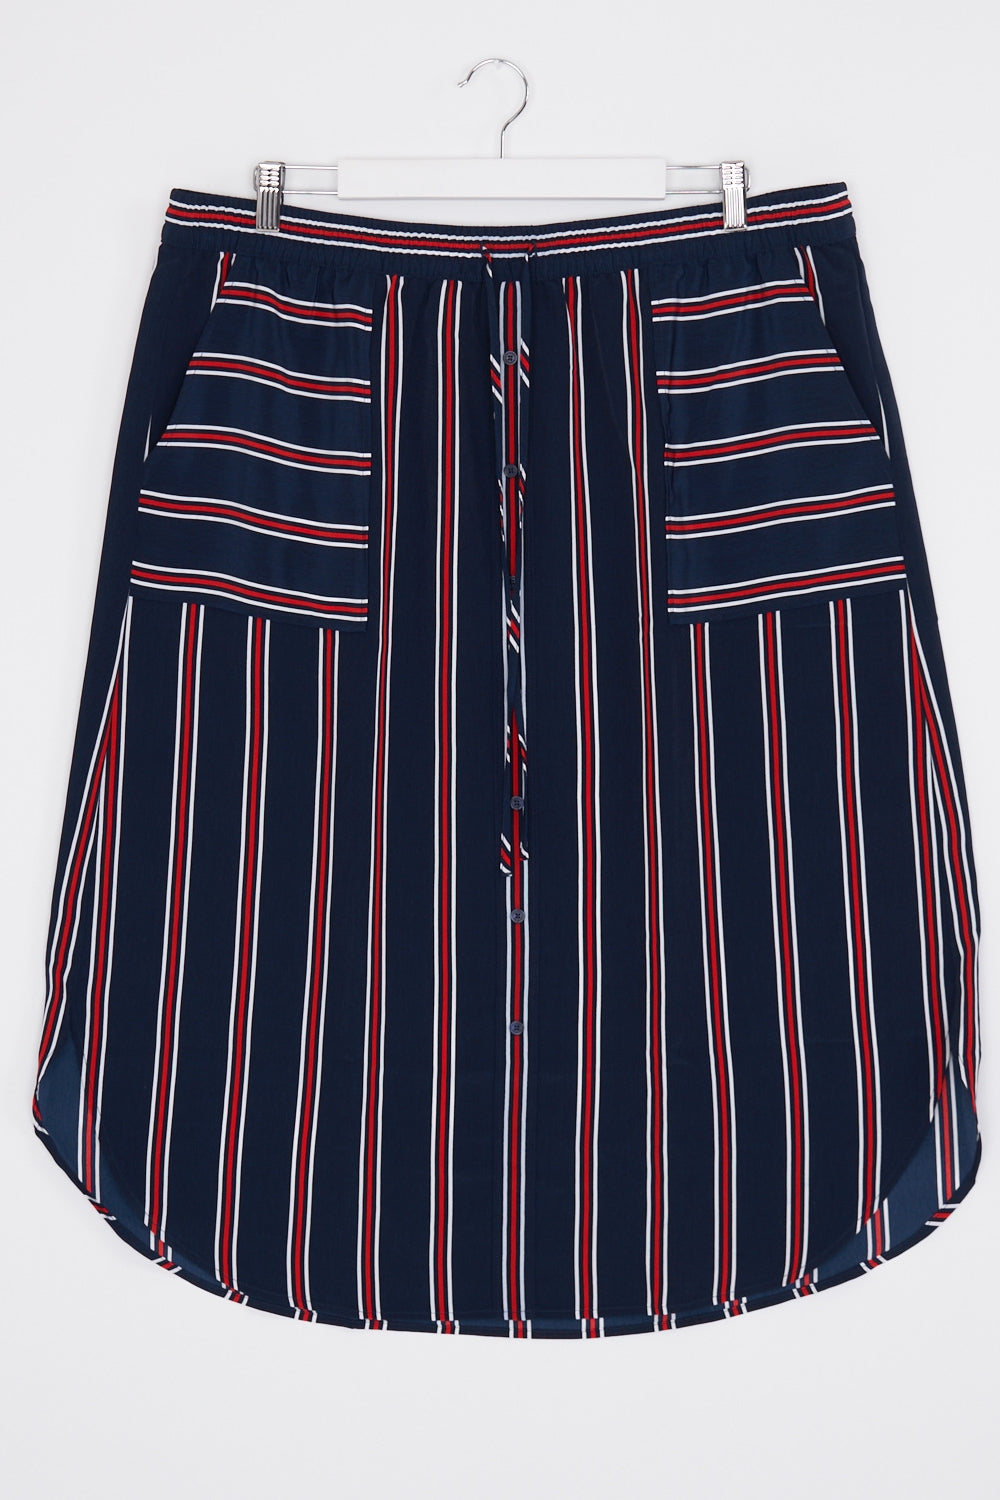 Tommy Hilfiger Navy Striped Skirt XXL